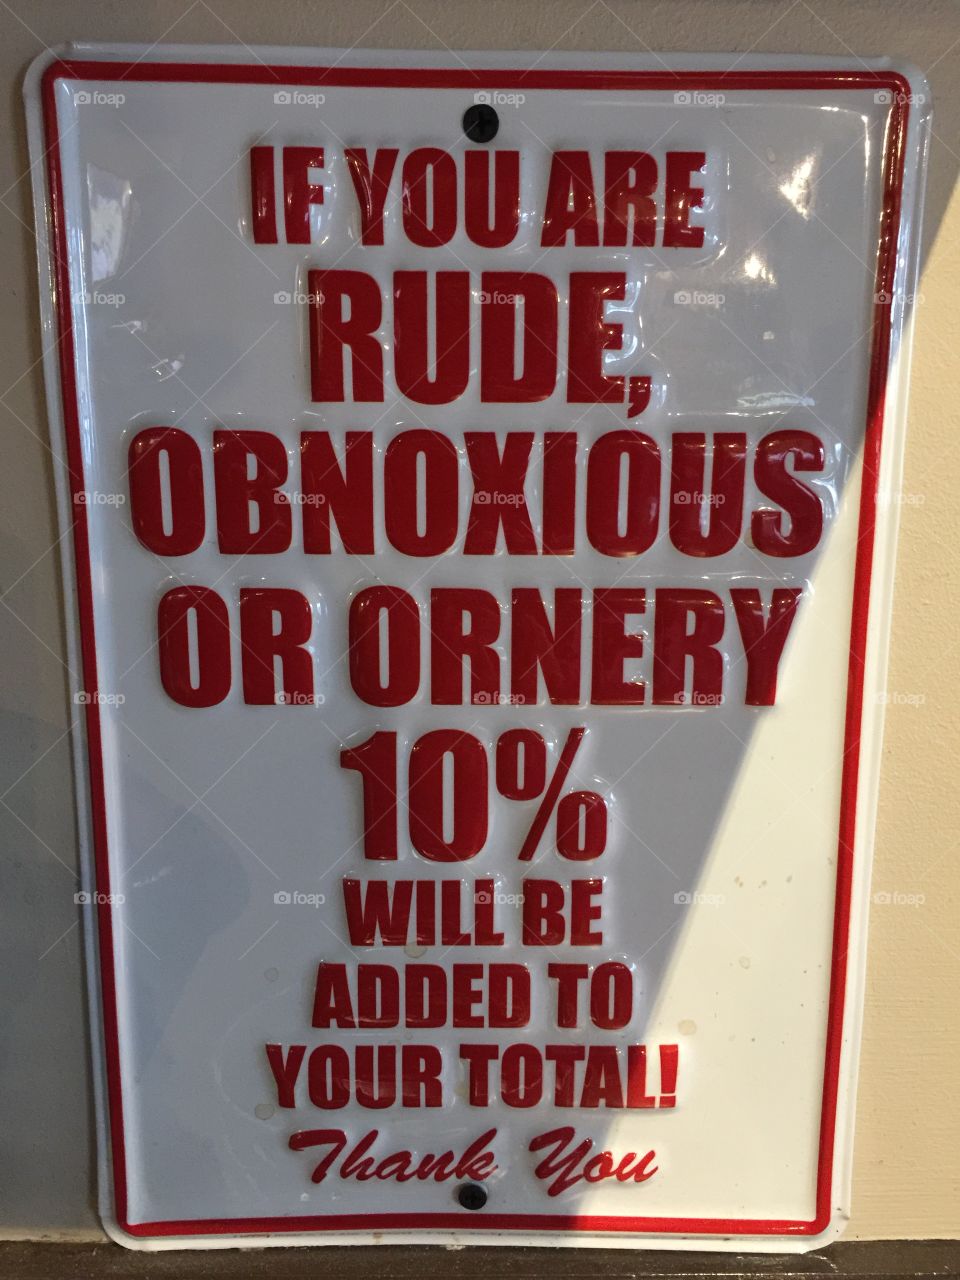 Rude, obnoxious sign